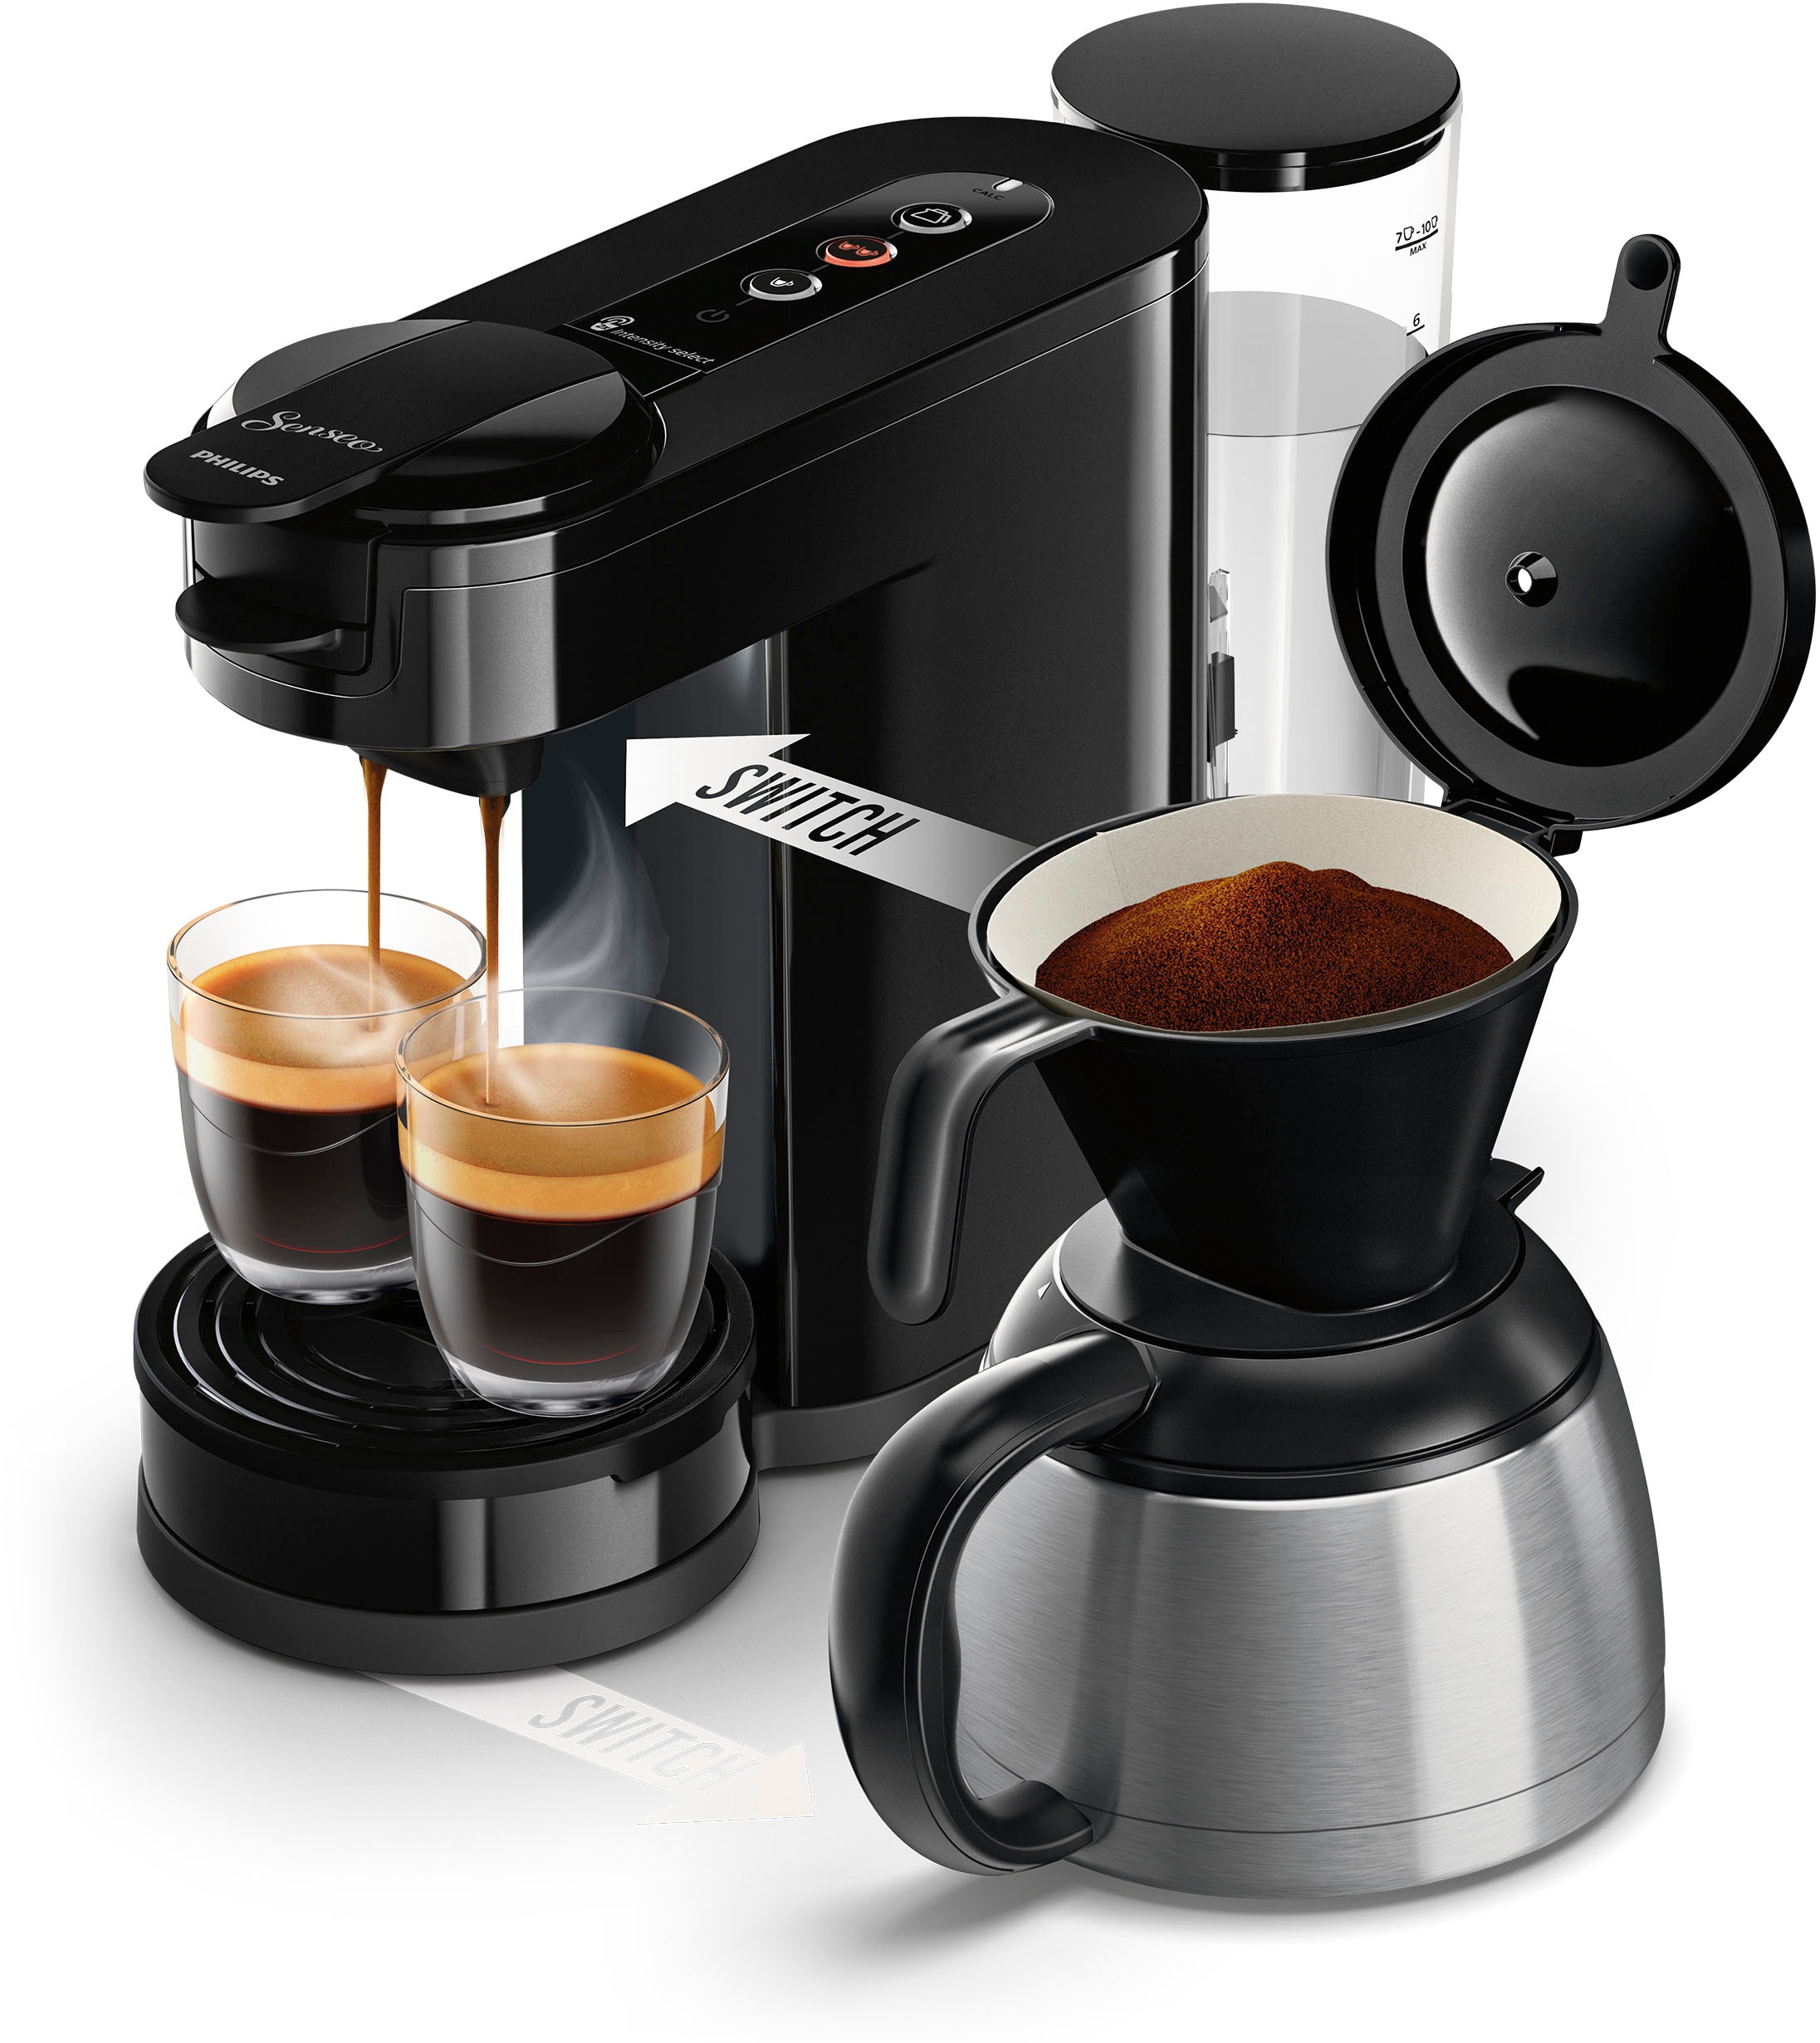 l HD6592/64, Technologie«, recyceltem Kaffeekanne, Kaffeepadmaschine 1 Plus, kaufen €9,90 Philips Plastik, Kaffeepaddose Wert Boost inkl. Senseo 26% UVP online »Switch Kaffee Crema